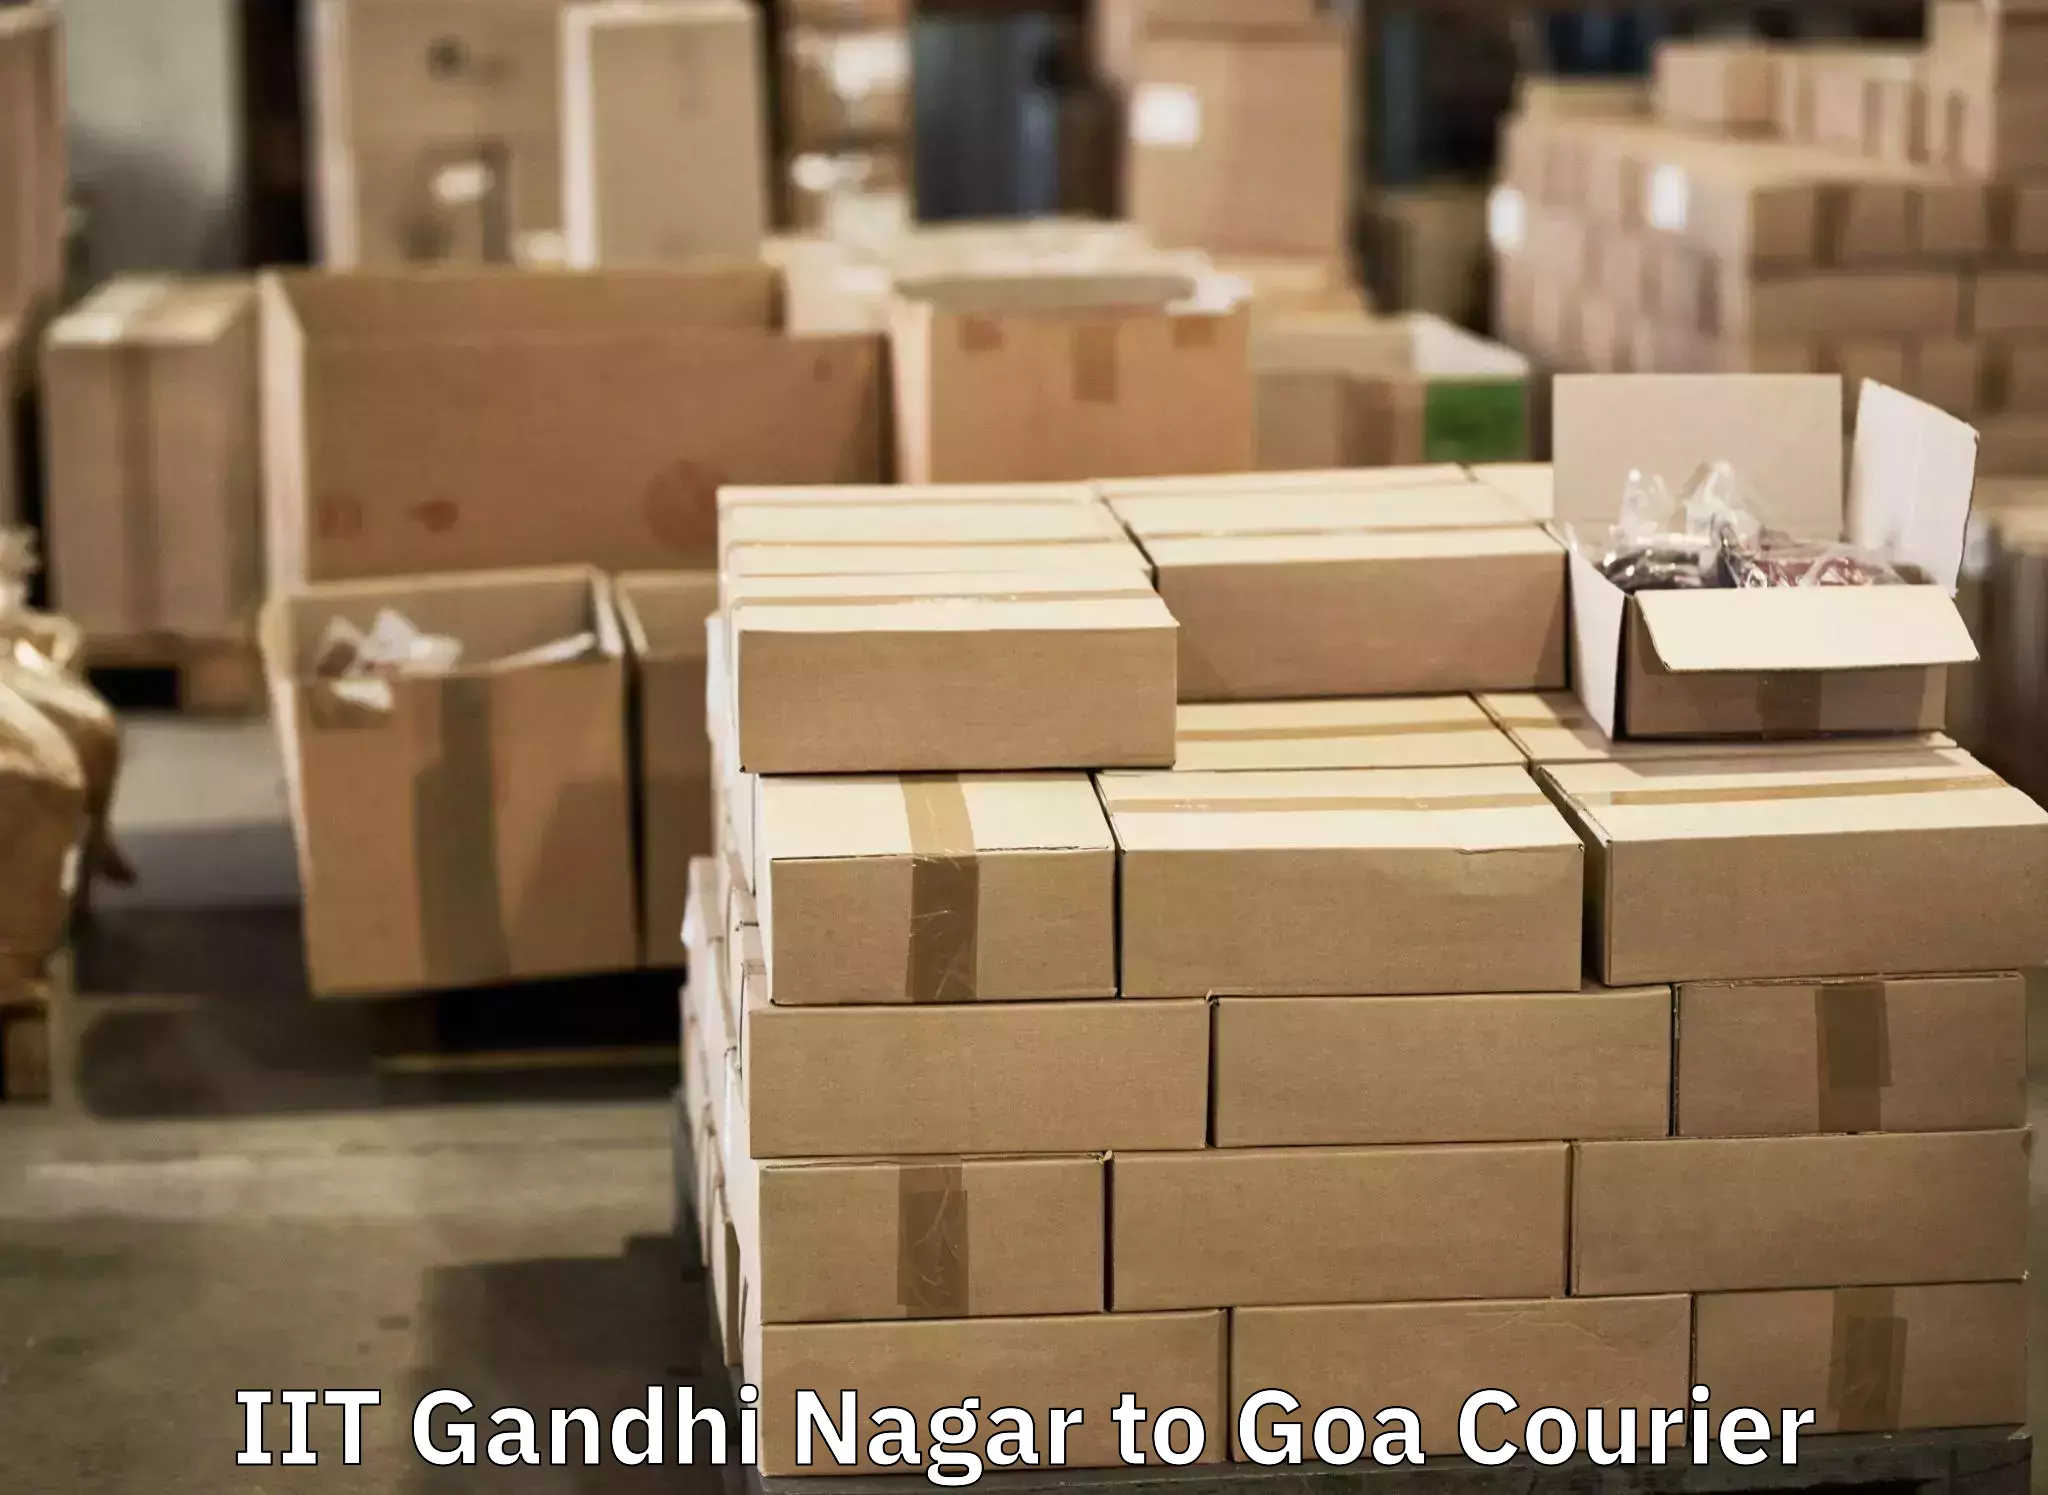 Emergency baggage service IIT Gandhi Nagar to Goa